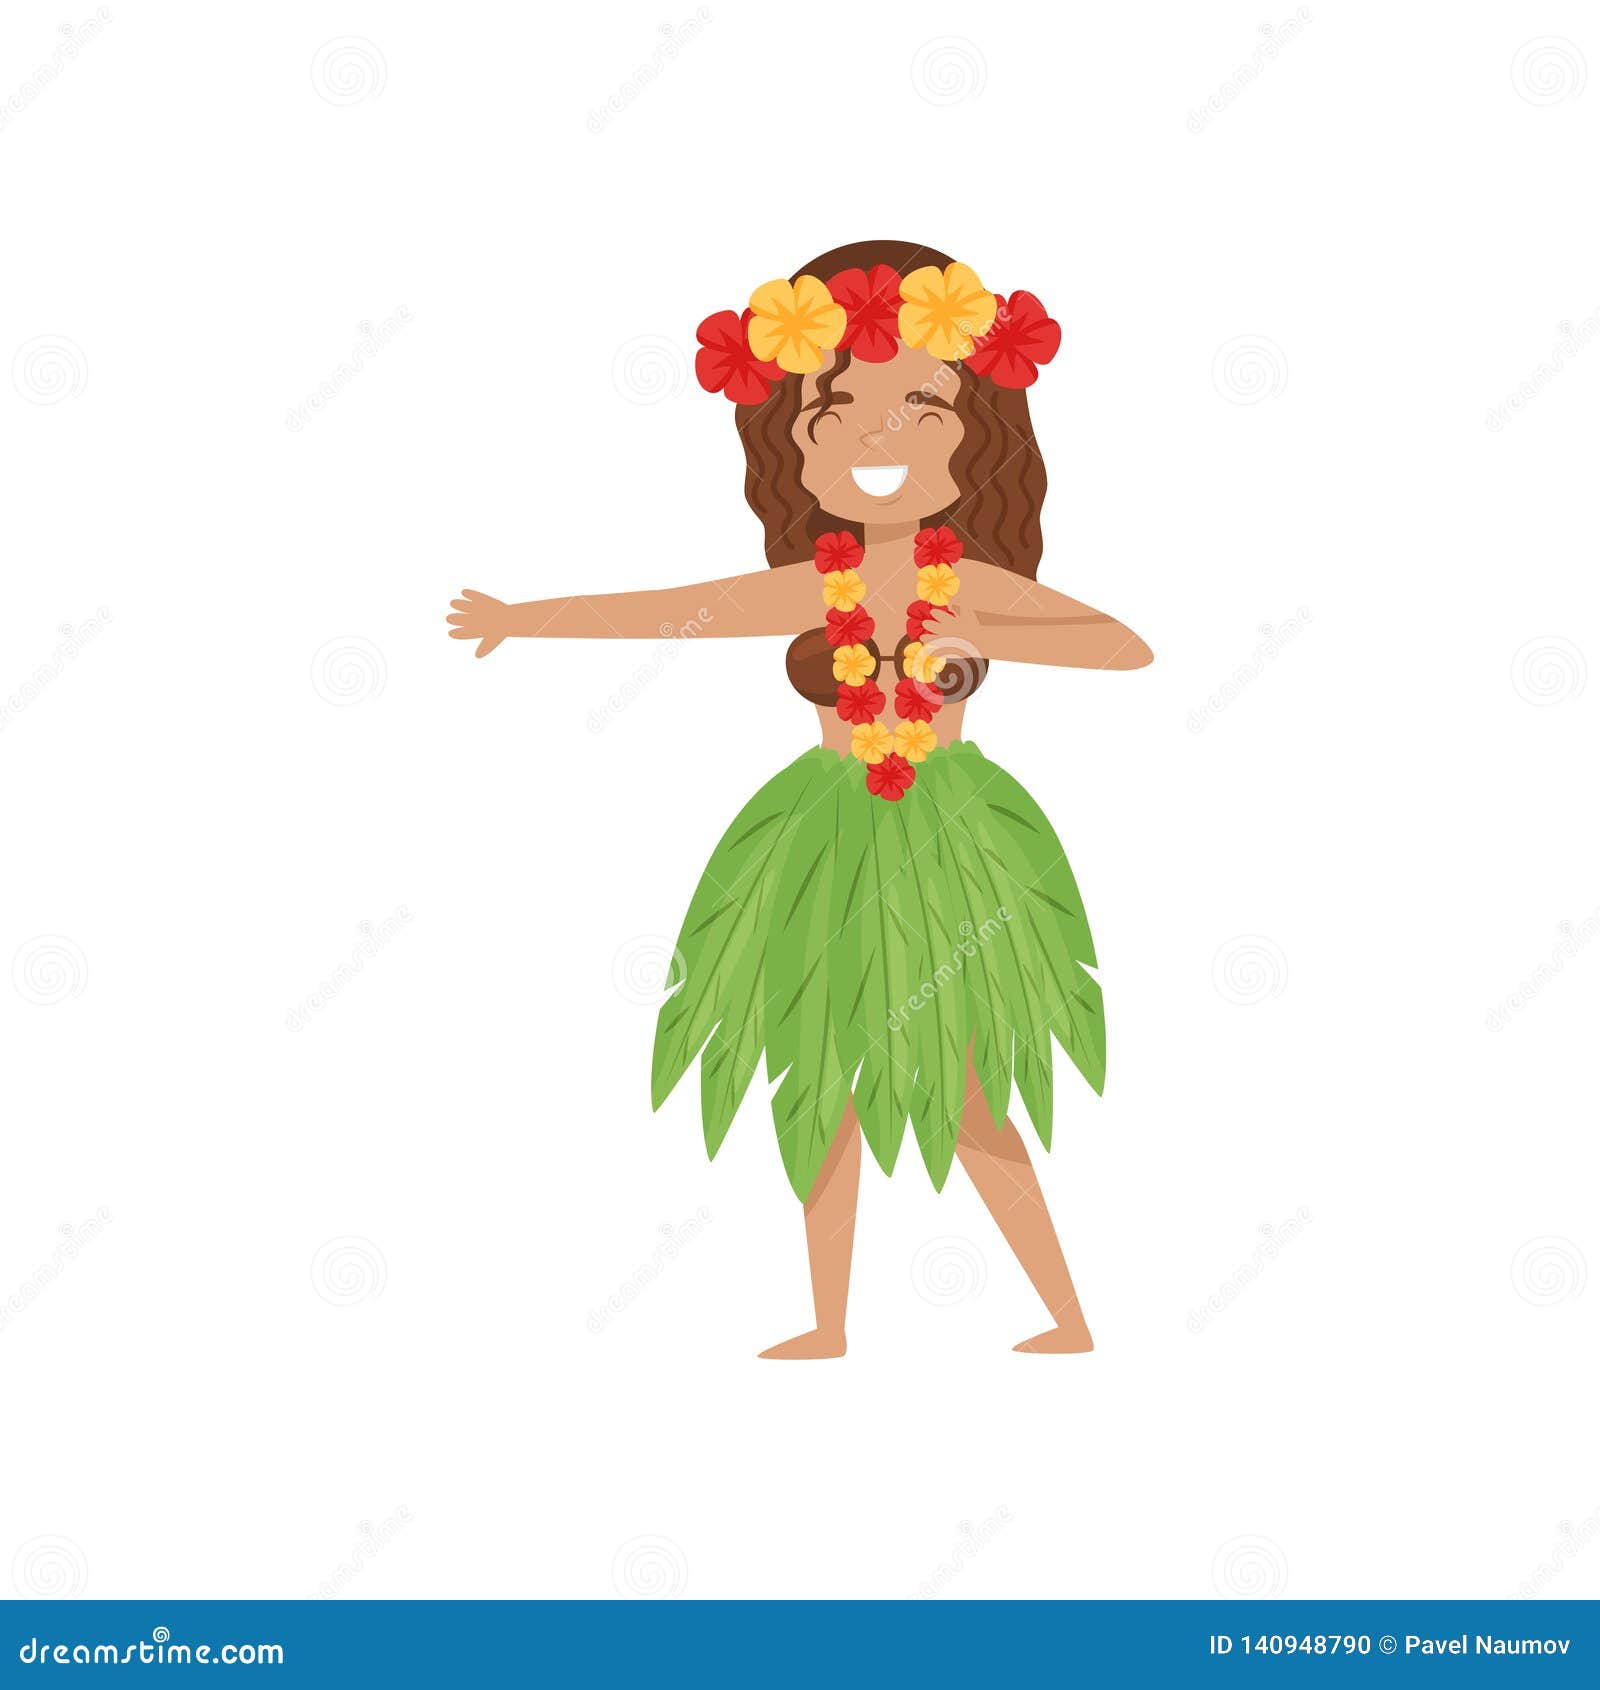 https://thumbs.dreamstime.com/z/dancing-girl-hawaii-traditional-dress-character-hula-skirt-coconut-bra-flower-lei-flat-vector-design-cheerful-cartoon-140948790.jpg